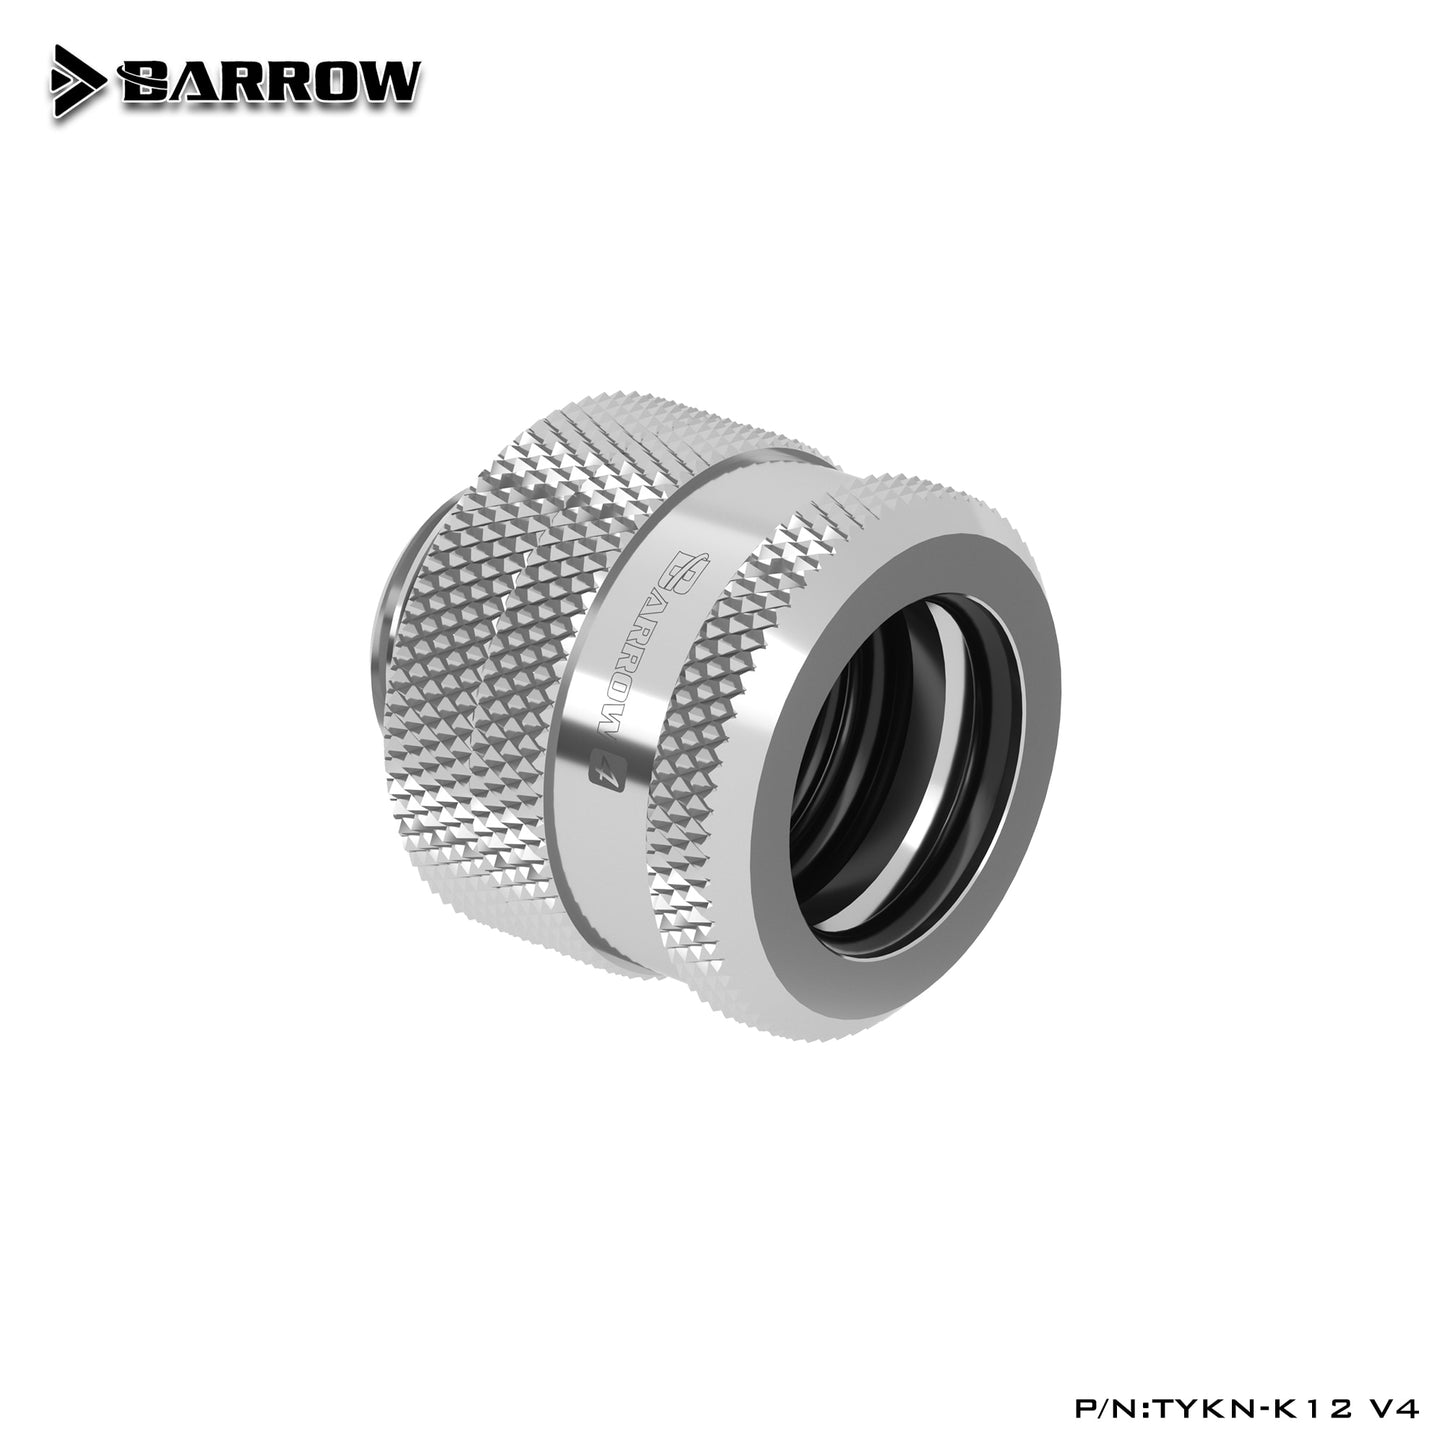 Barrow TYKN-K12 V4, OD12mm Hard Tube Fittings, G1/4 Adapters For OD12mm Hard Tubes